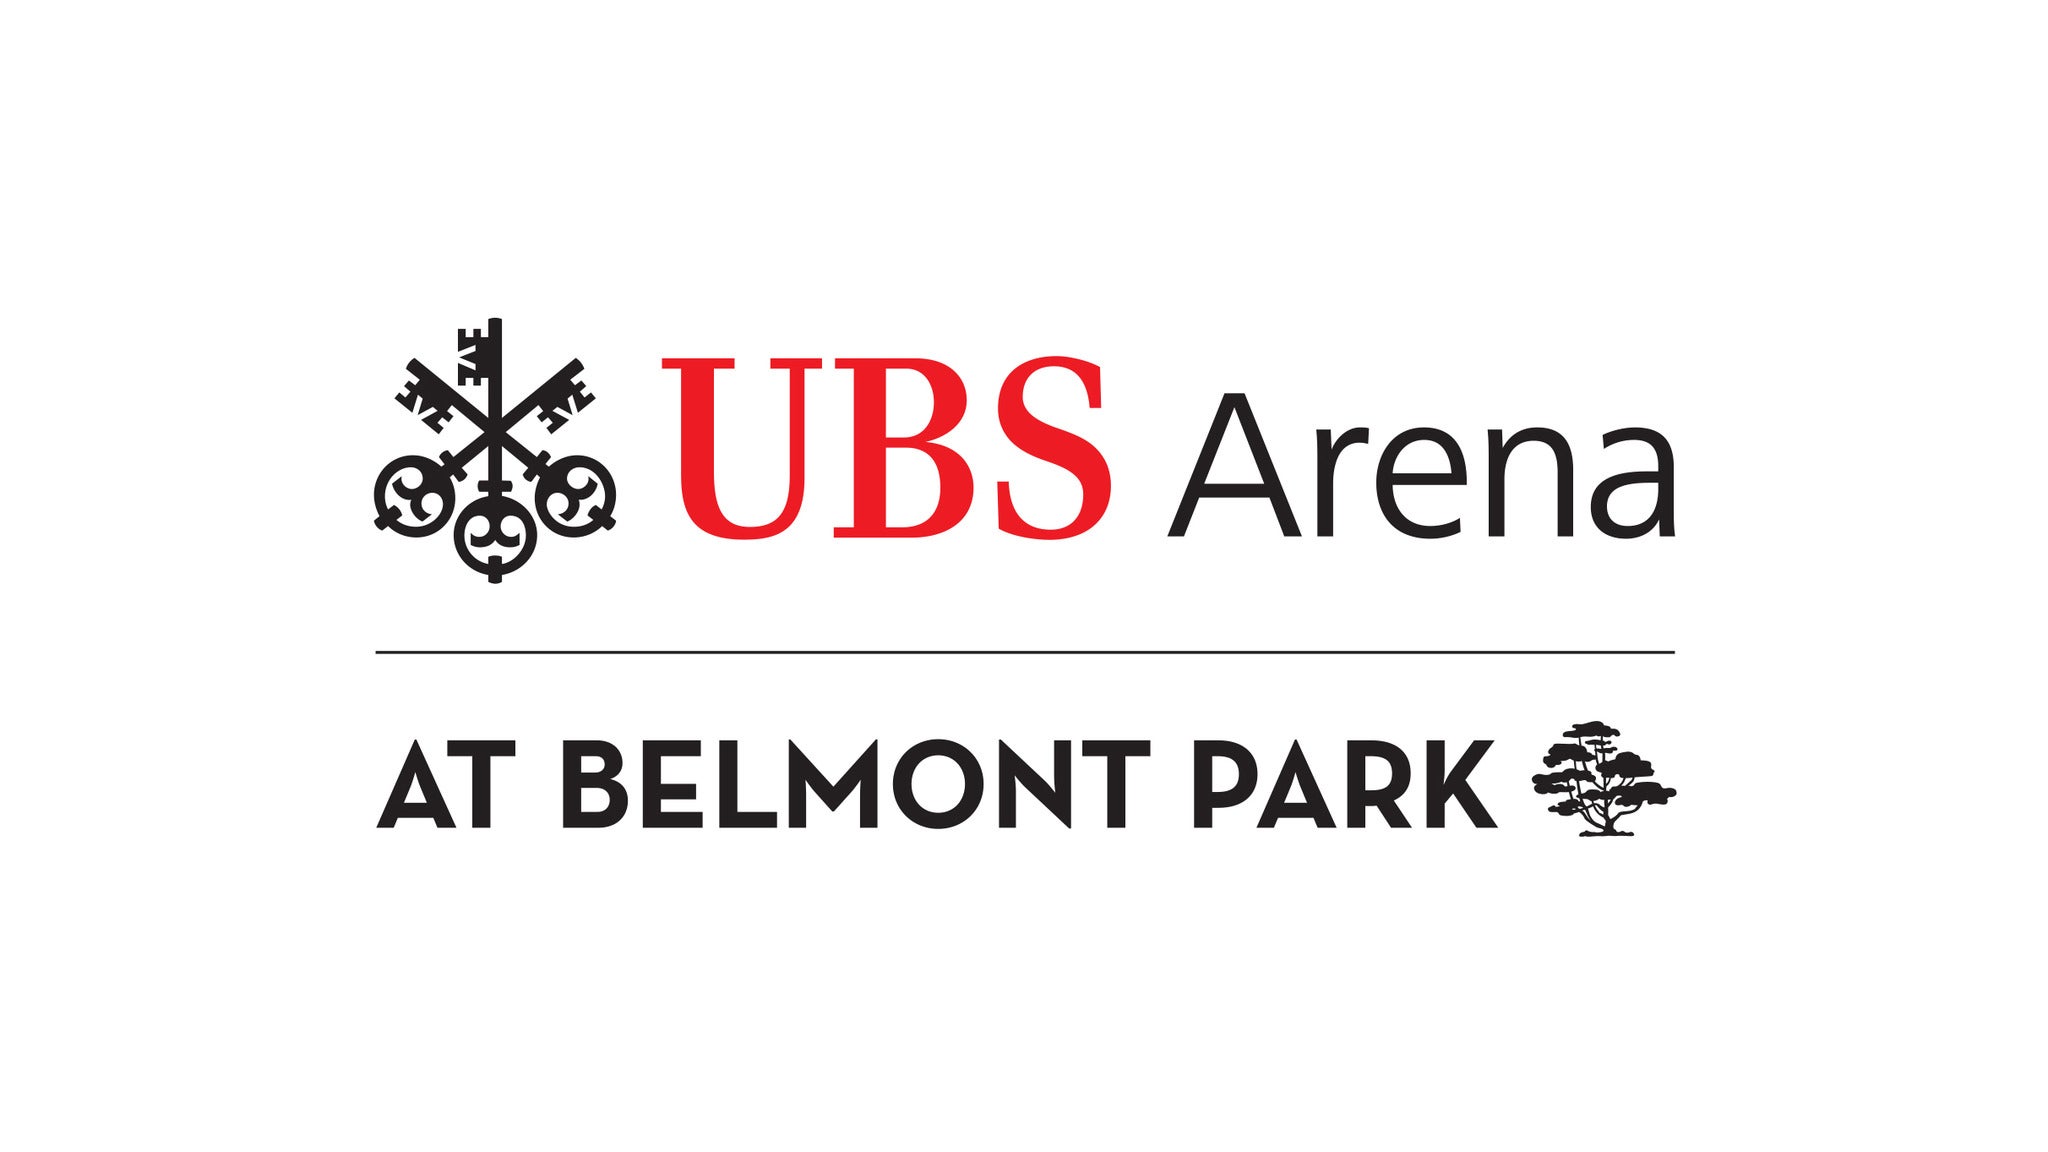 UBS Arena Parking - Monster Jam in Belmont Park promo photo for Exclusive presale offer code